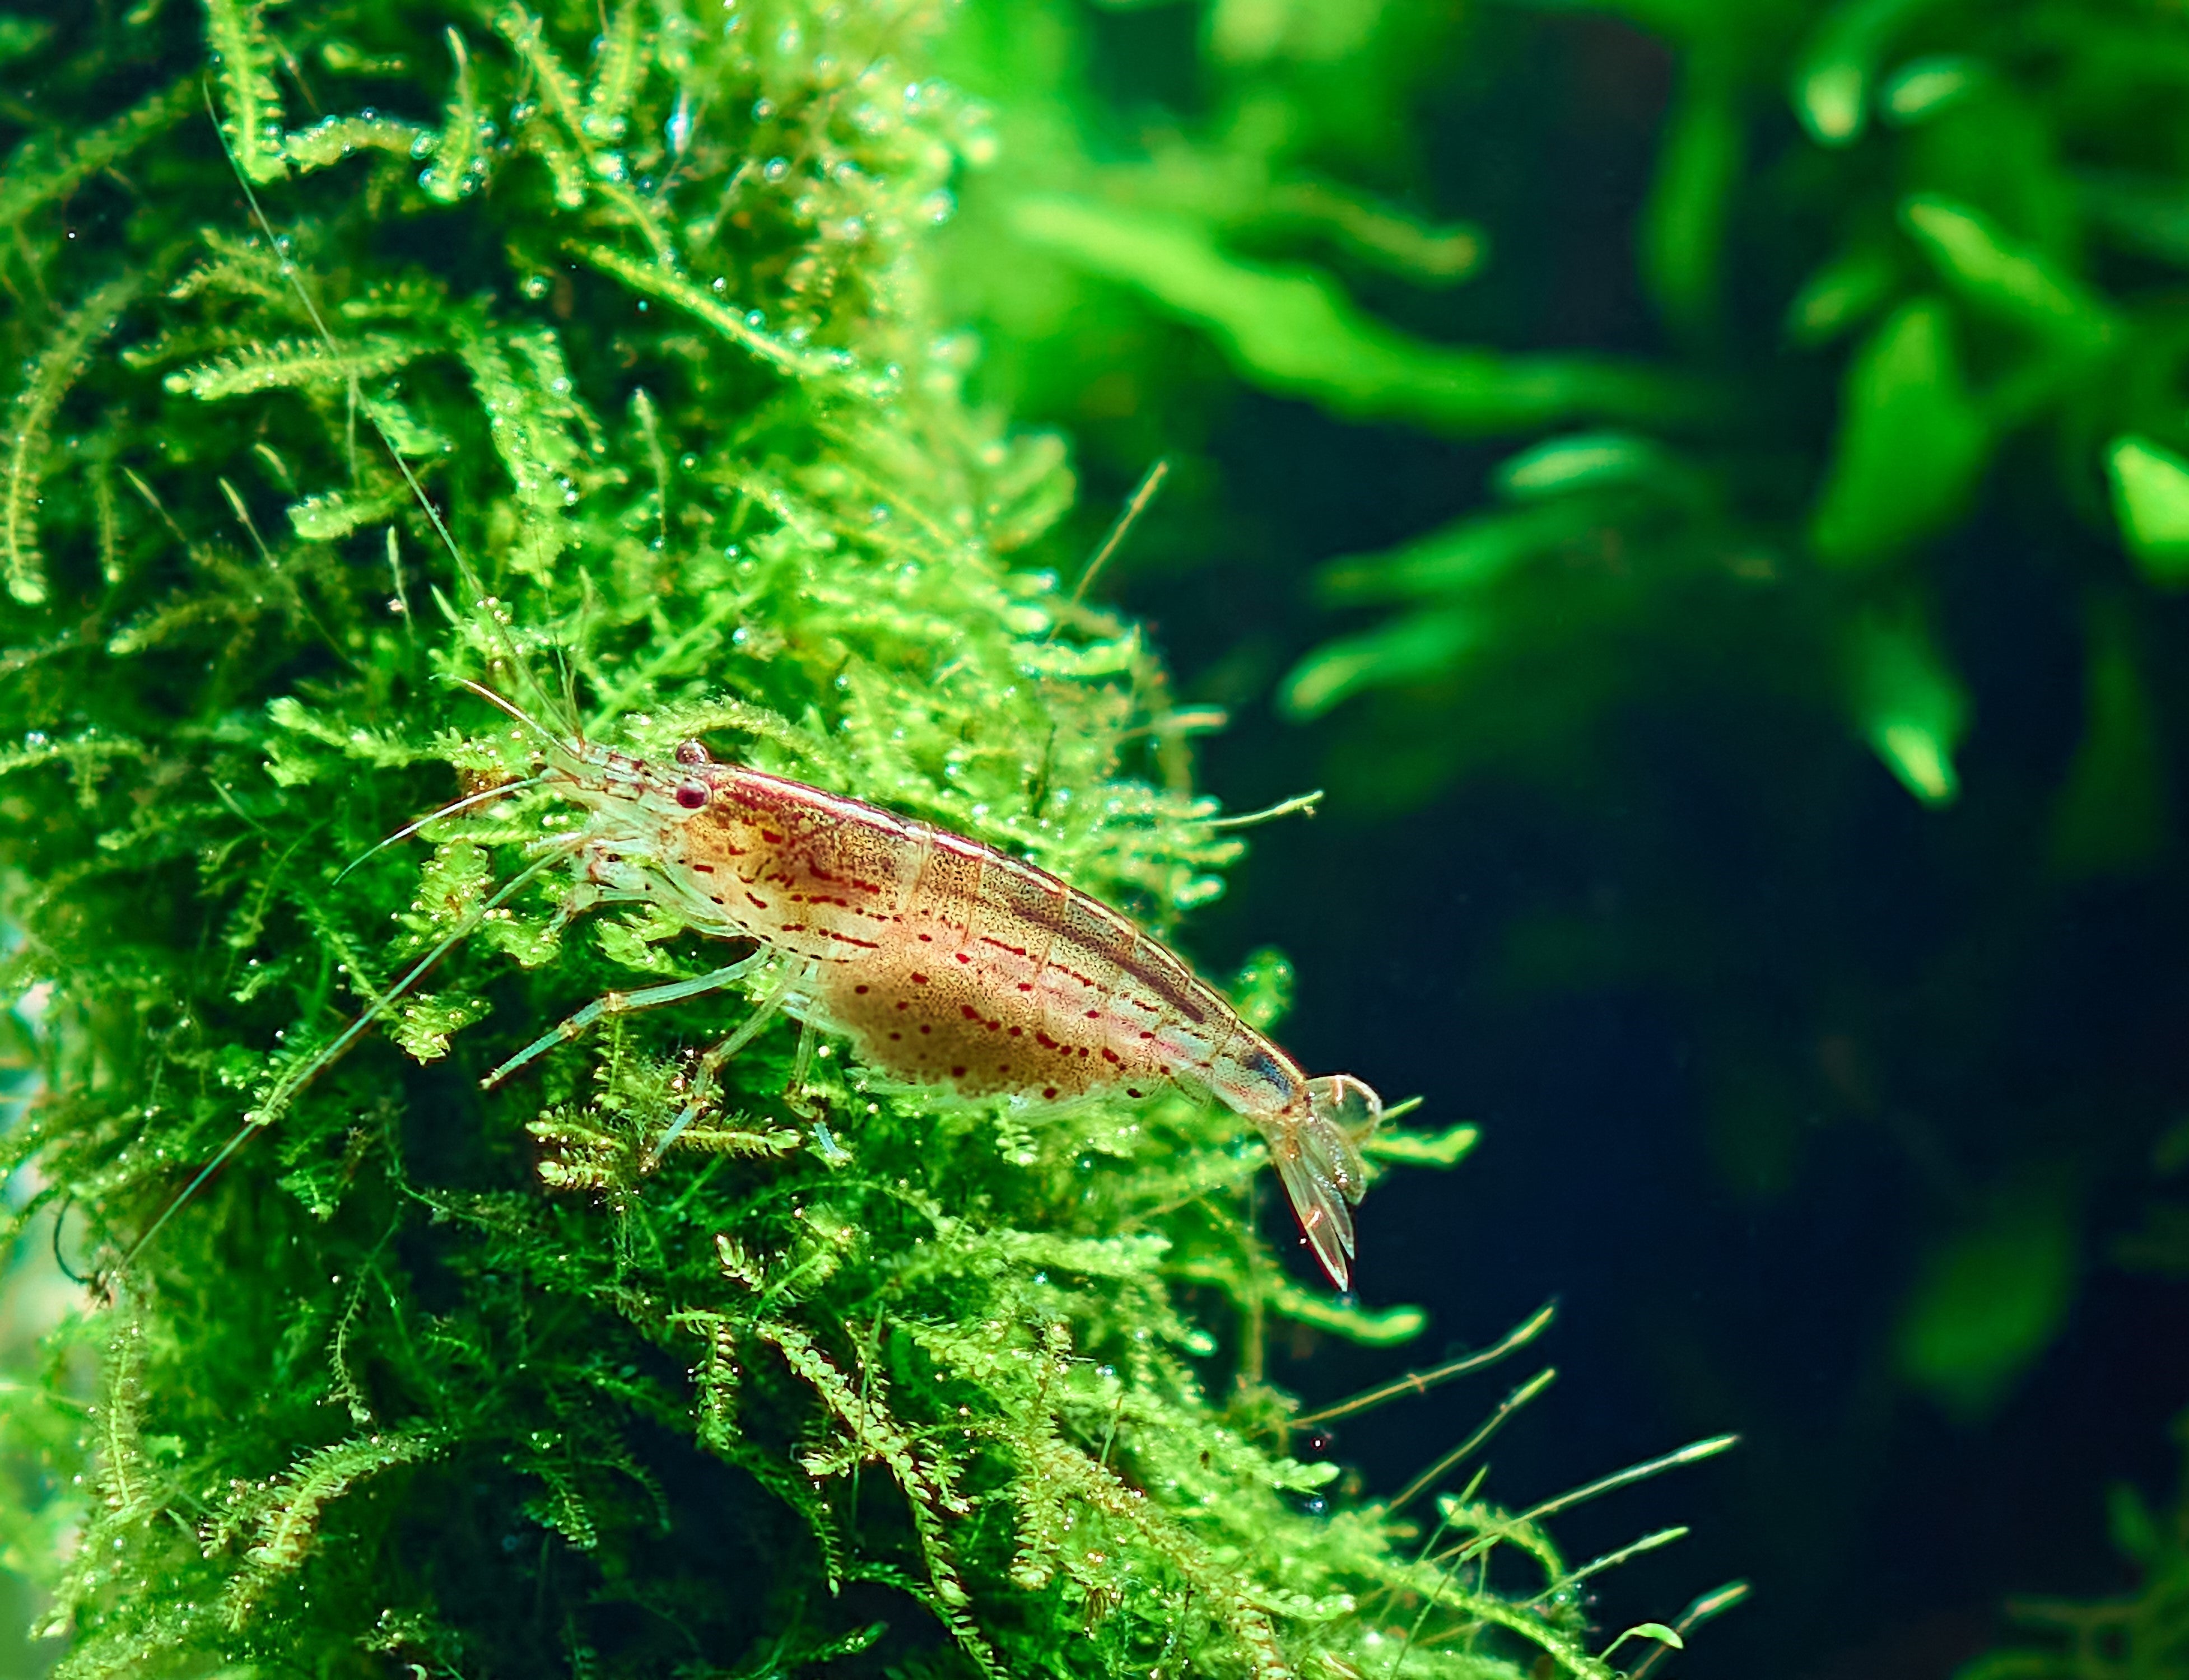 Amano shrimp eating algae in planted tank